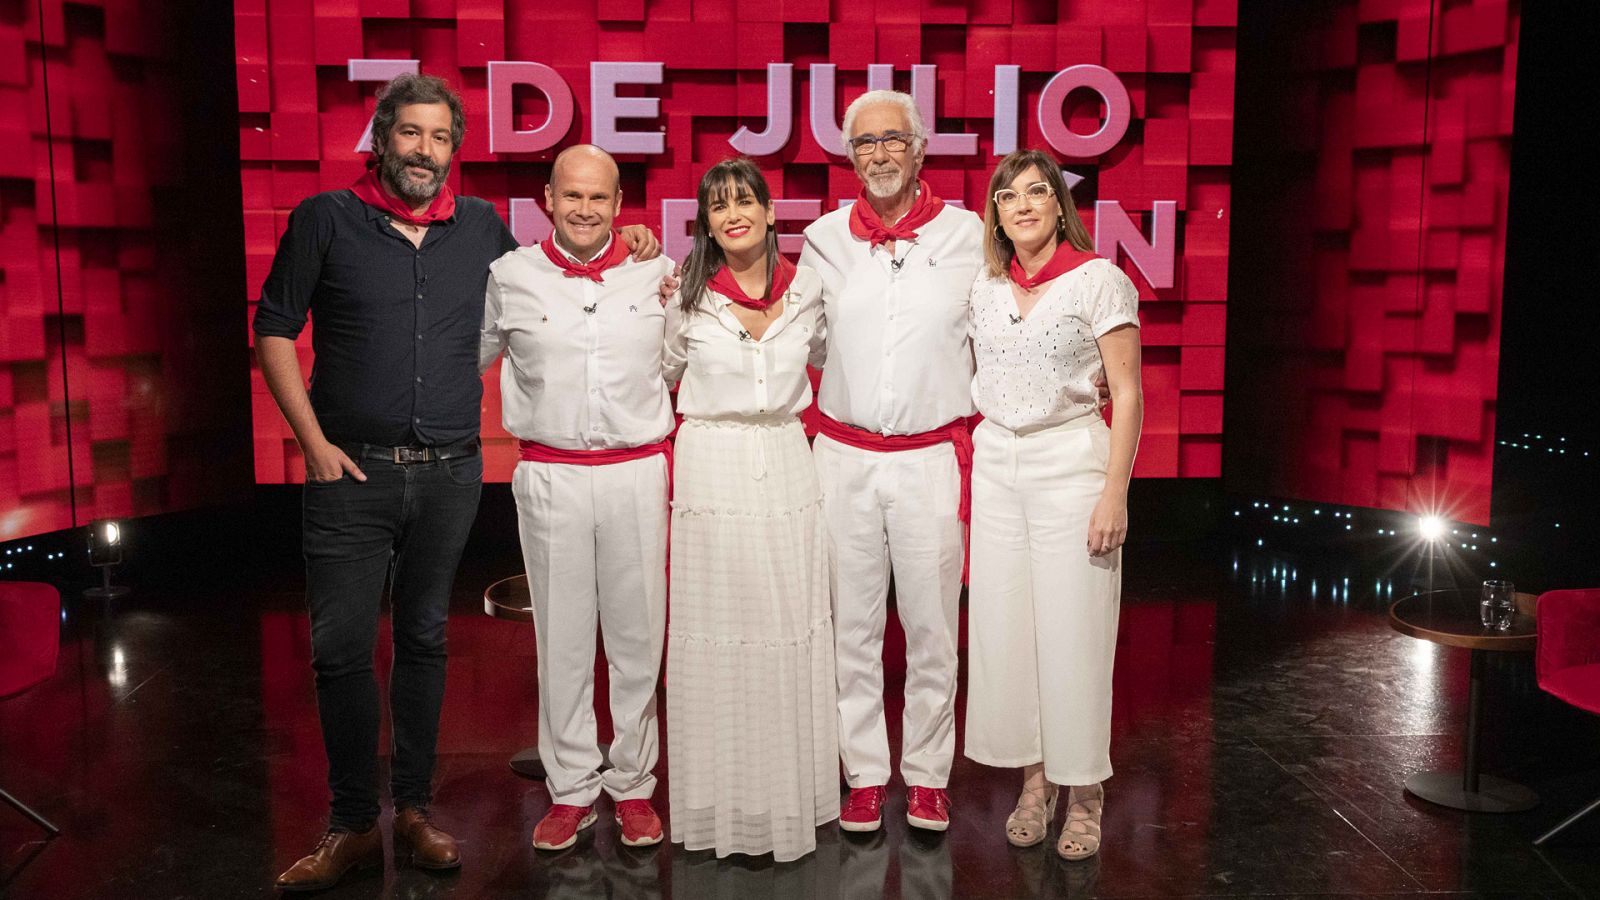 Carlos Pardo, Teo Lázaro, Elena S Sánchez, Solano y Jara Yáñez